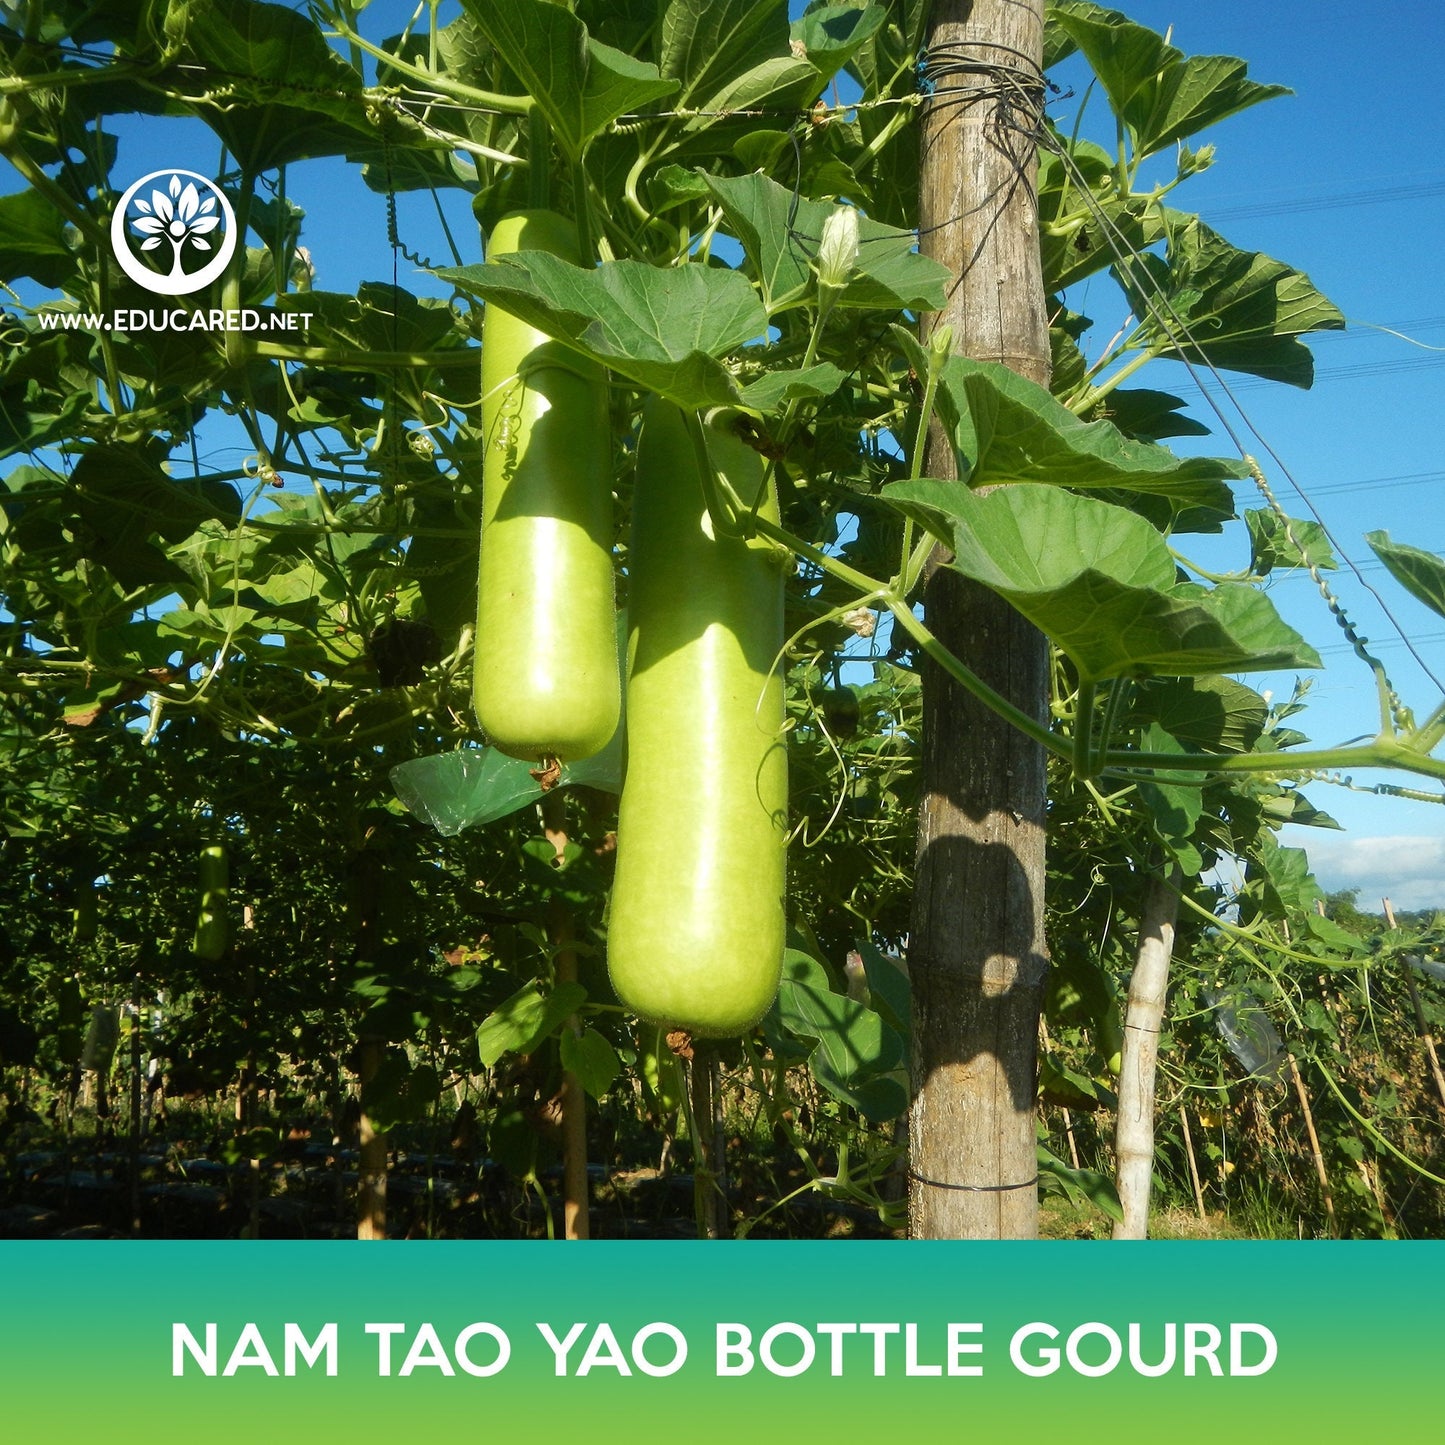 Nam Tao Yao Bottle Gourd Seeds, Opo Squash